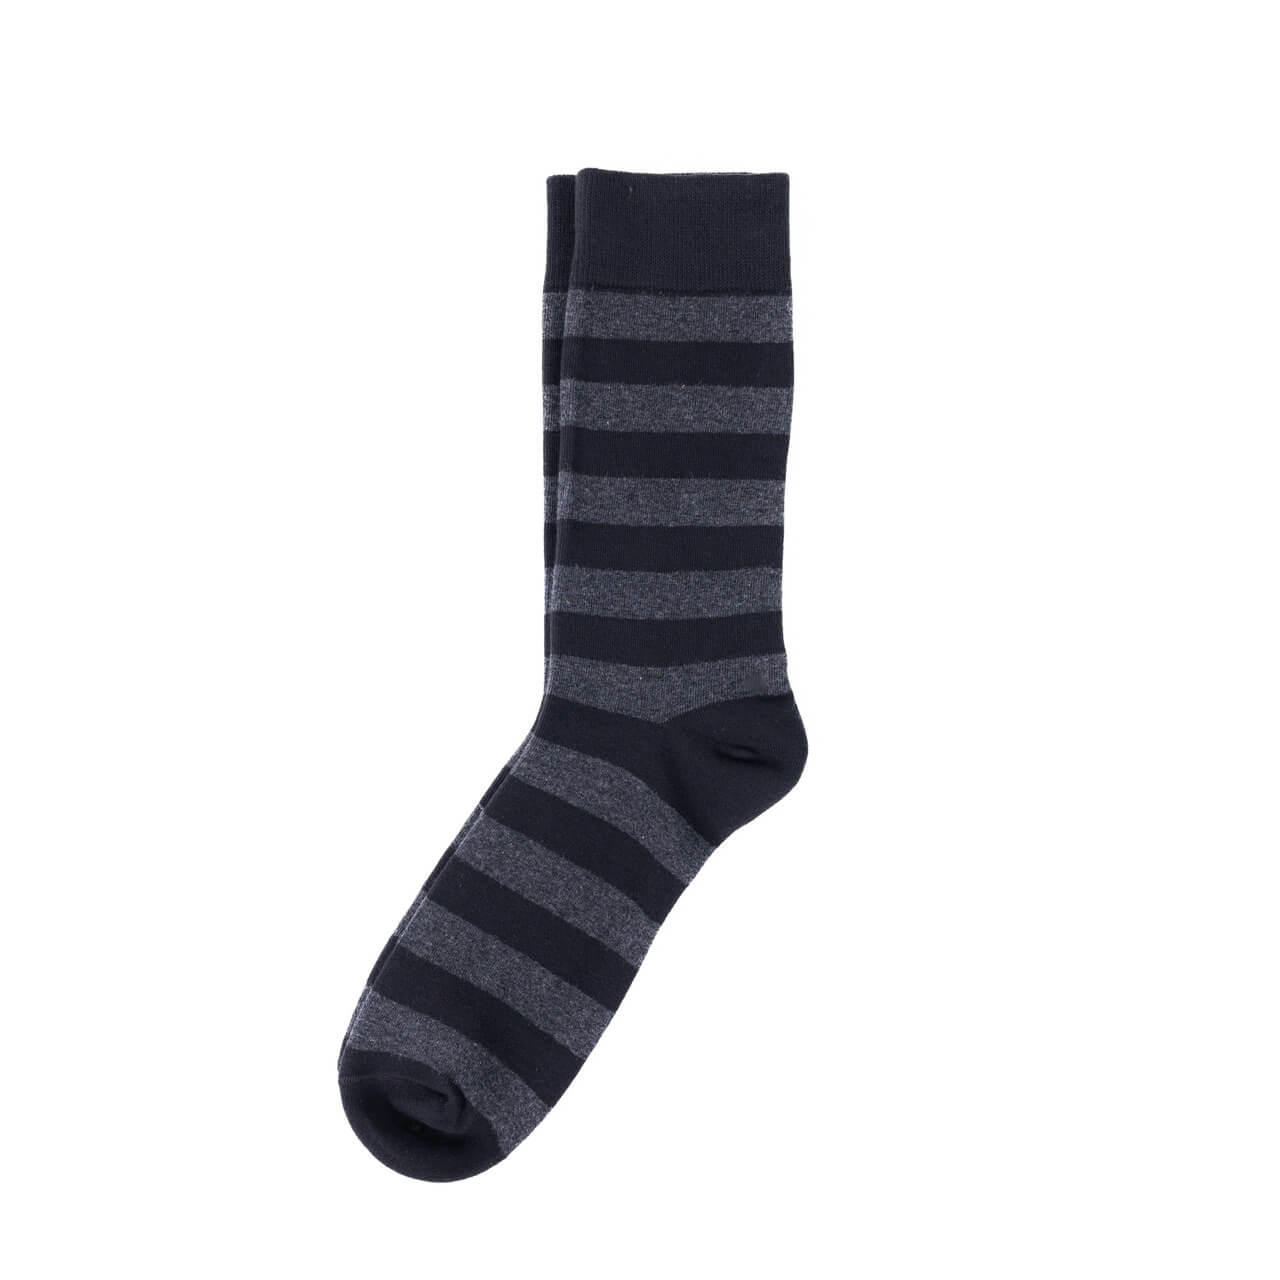 Black and Grey Striped Dress Socks